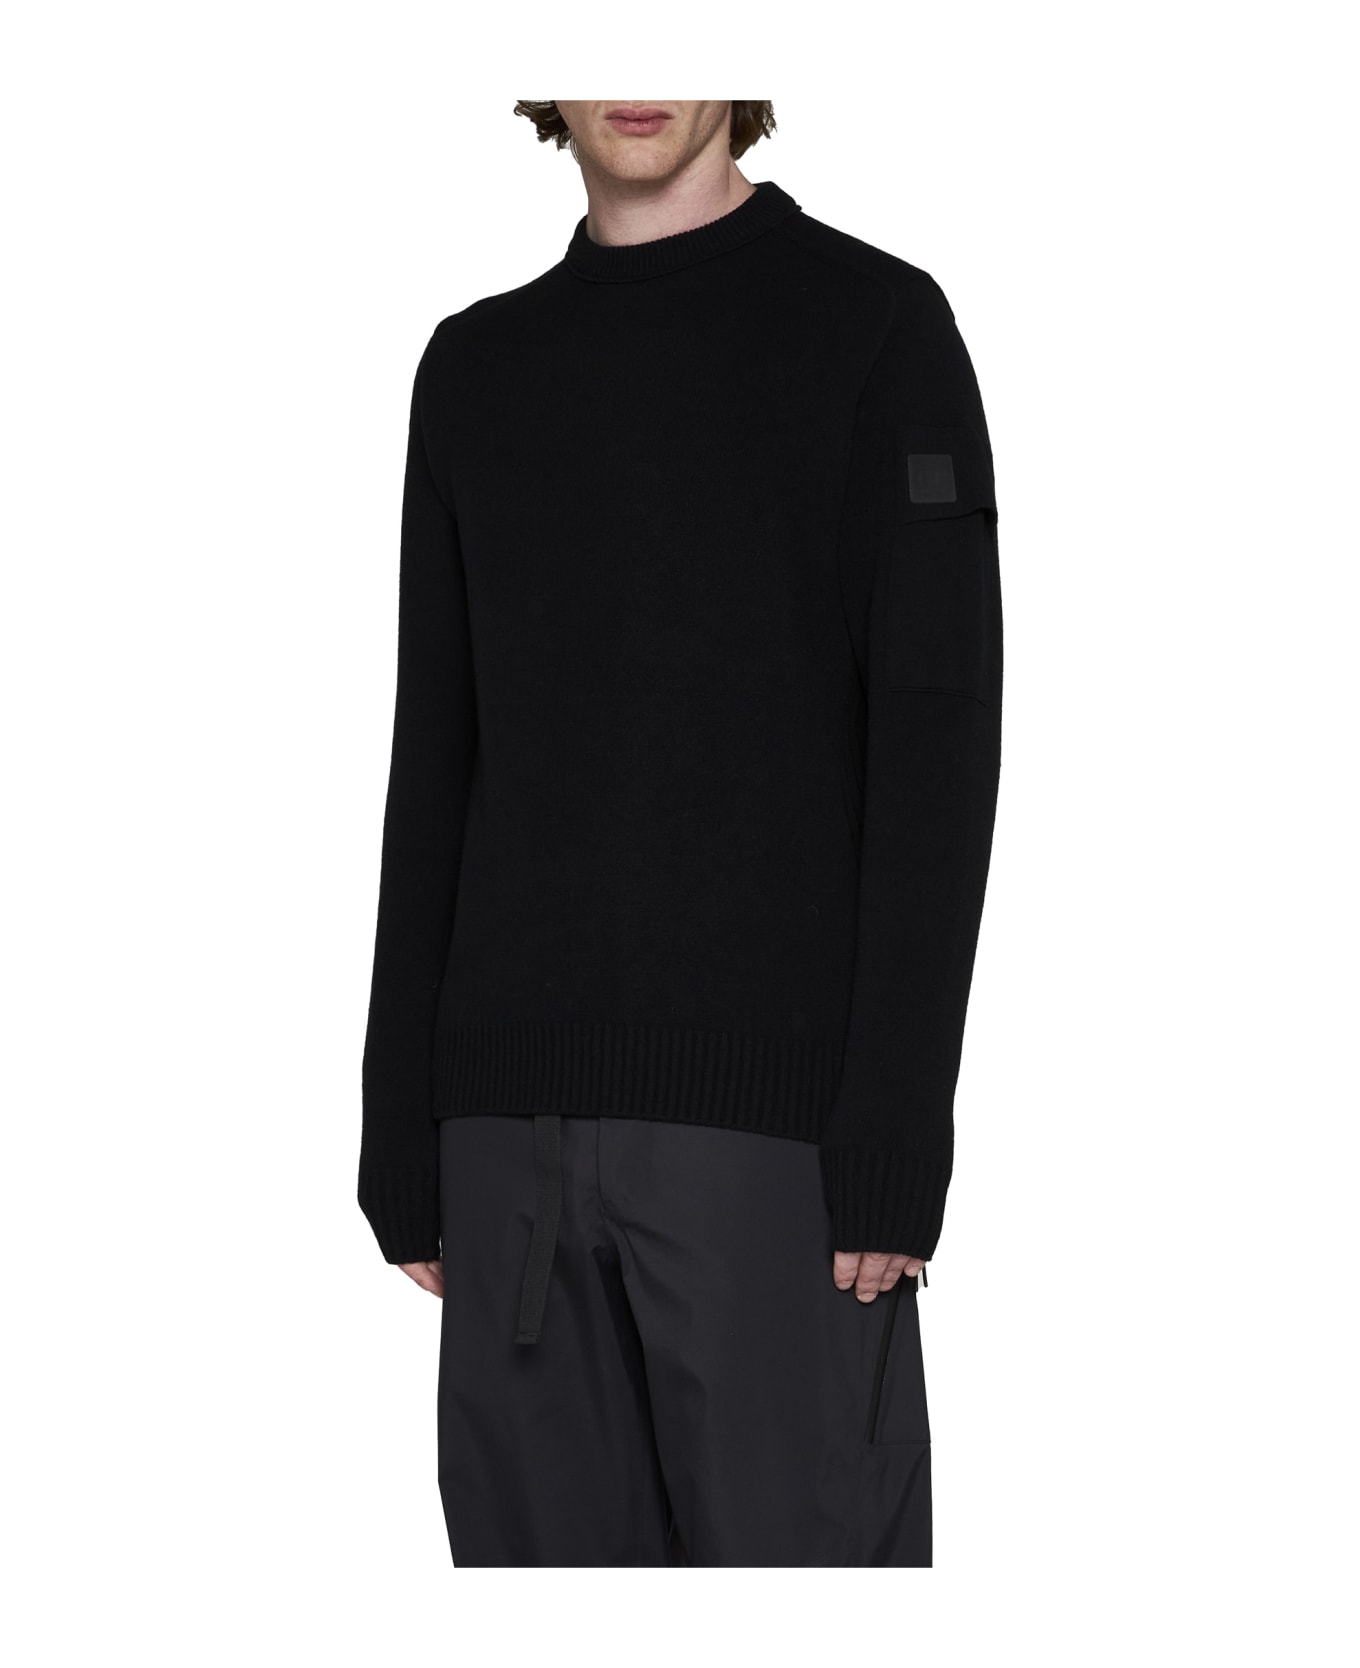 C.P. Company Metropolis Sweater - Black ニットウェア